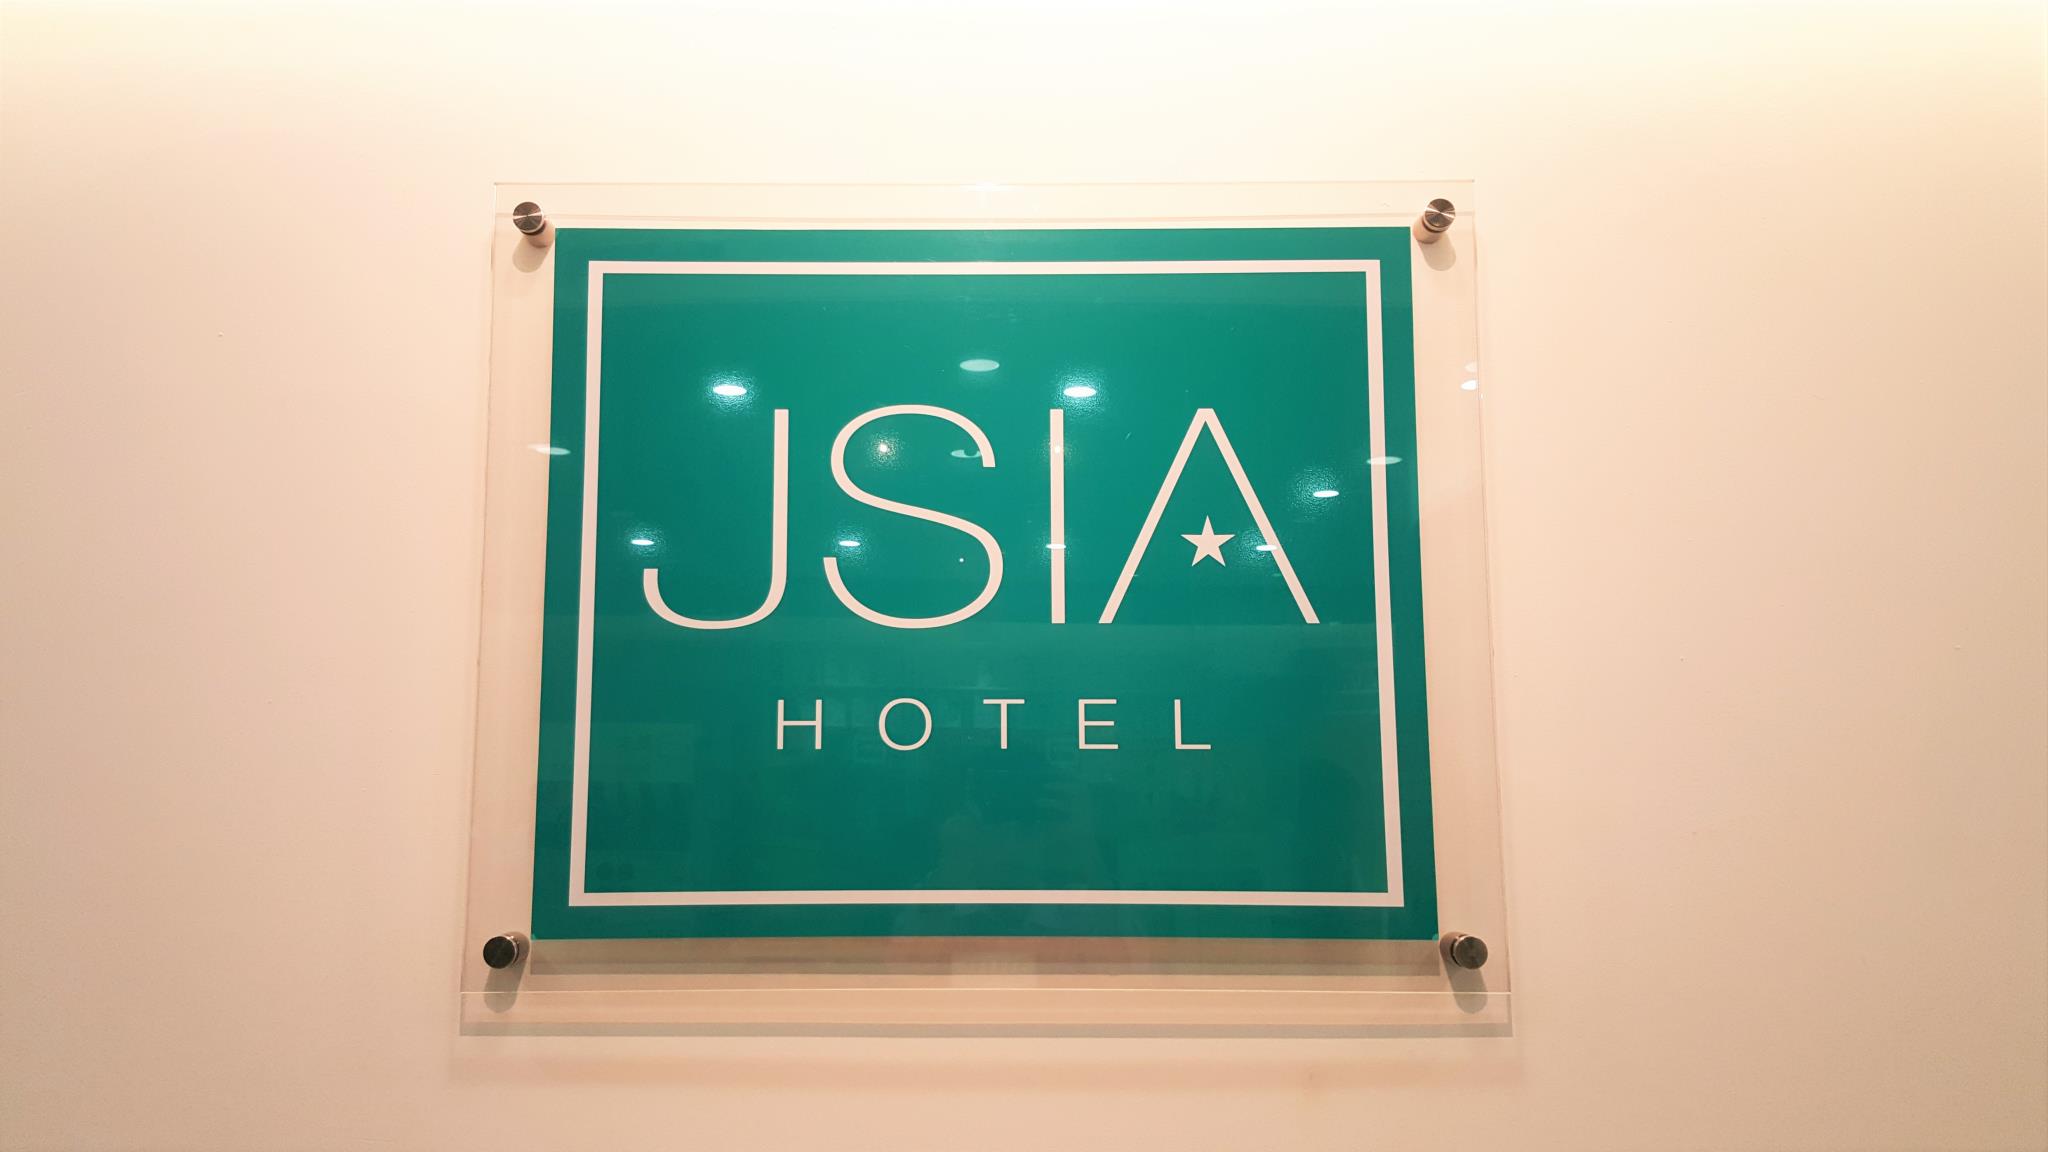 Jsia Hotel